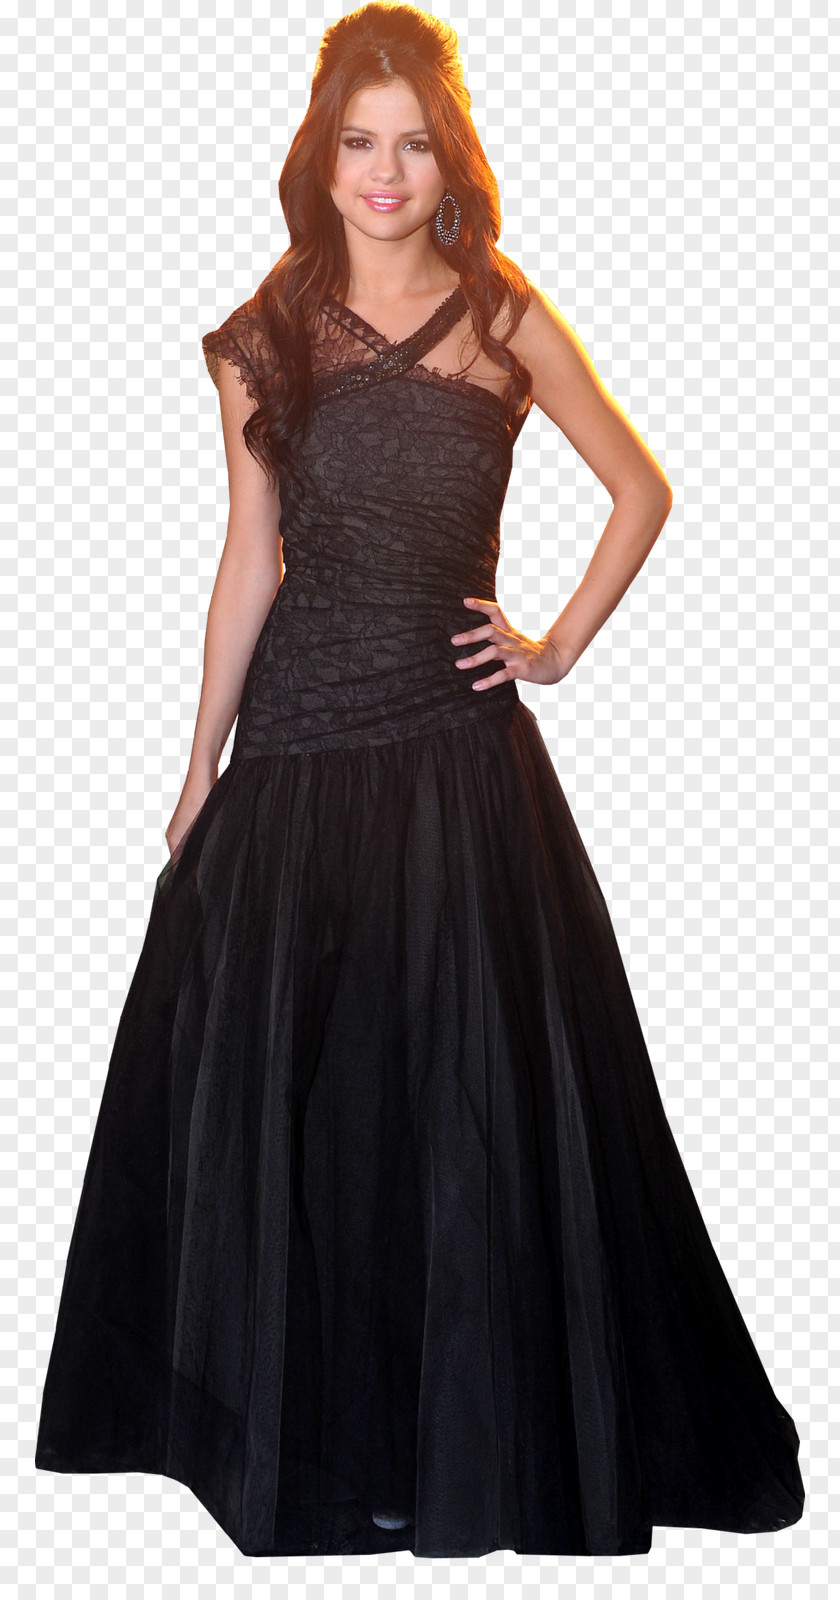 Selena Gomez Little Black Dress Warp Knitting Sheath PNG